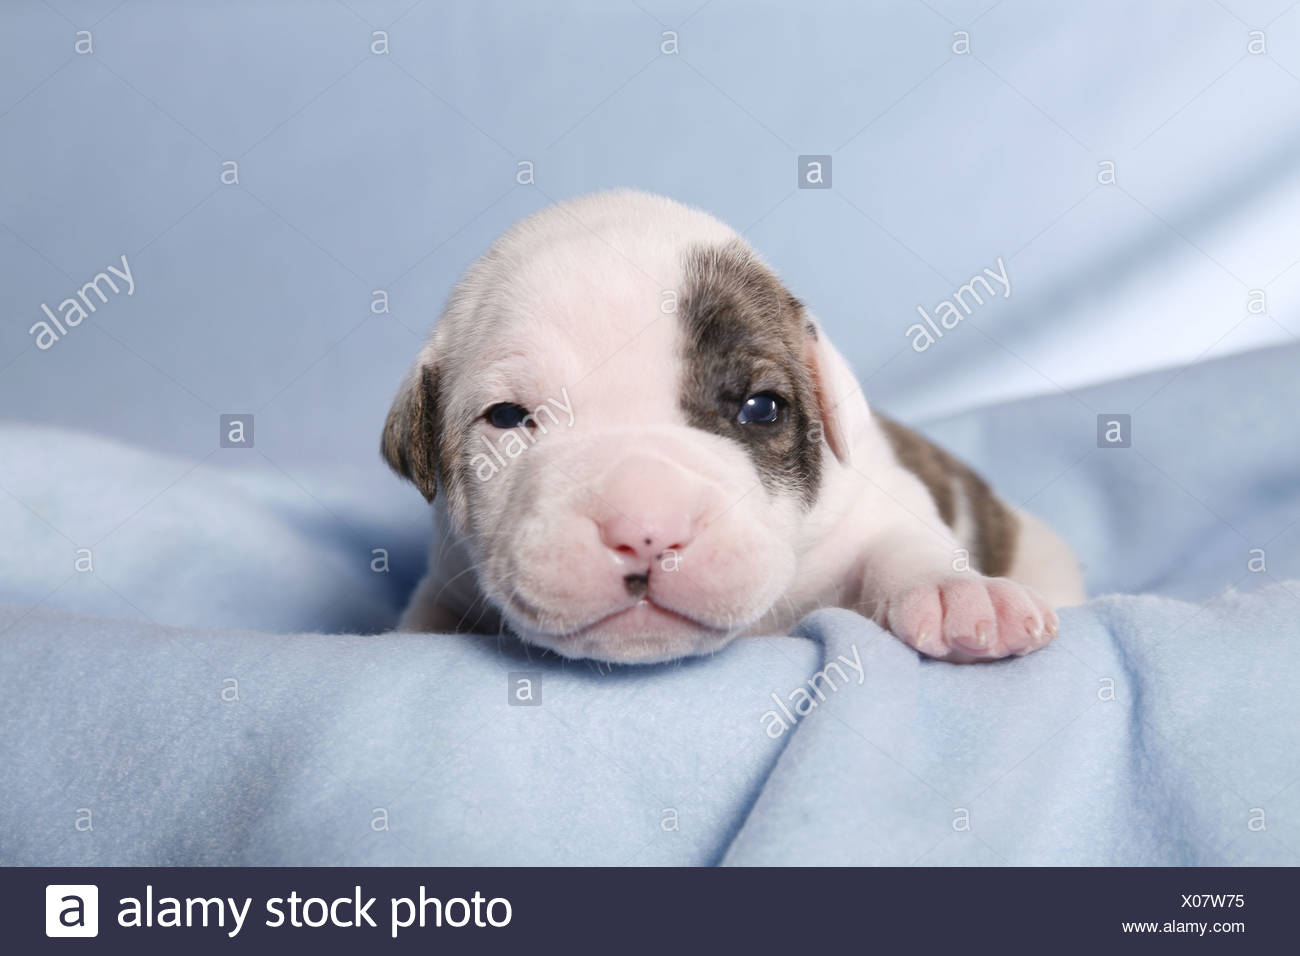 baby american bulldog